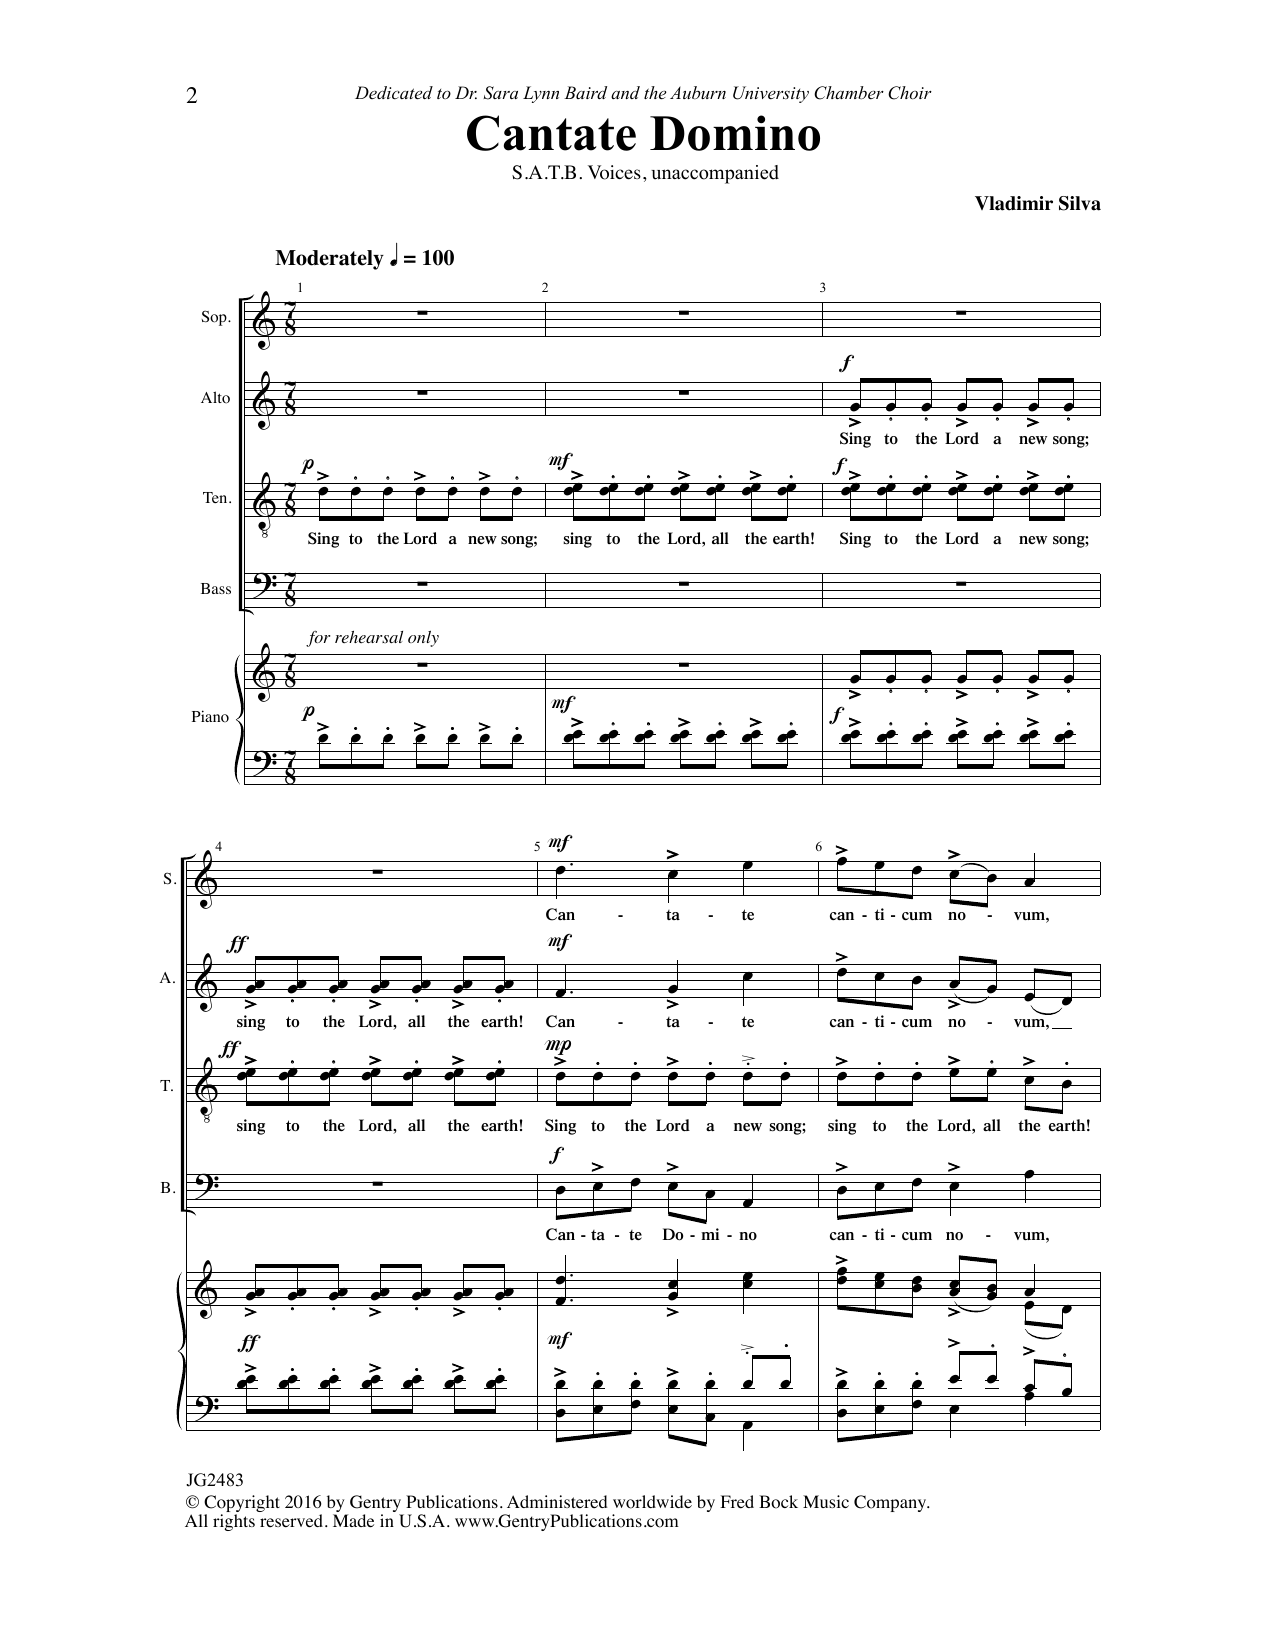 Download Vladimir Silva Cantate Domino Sheet Music